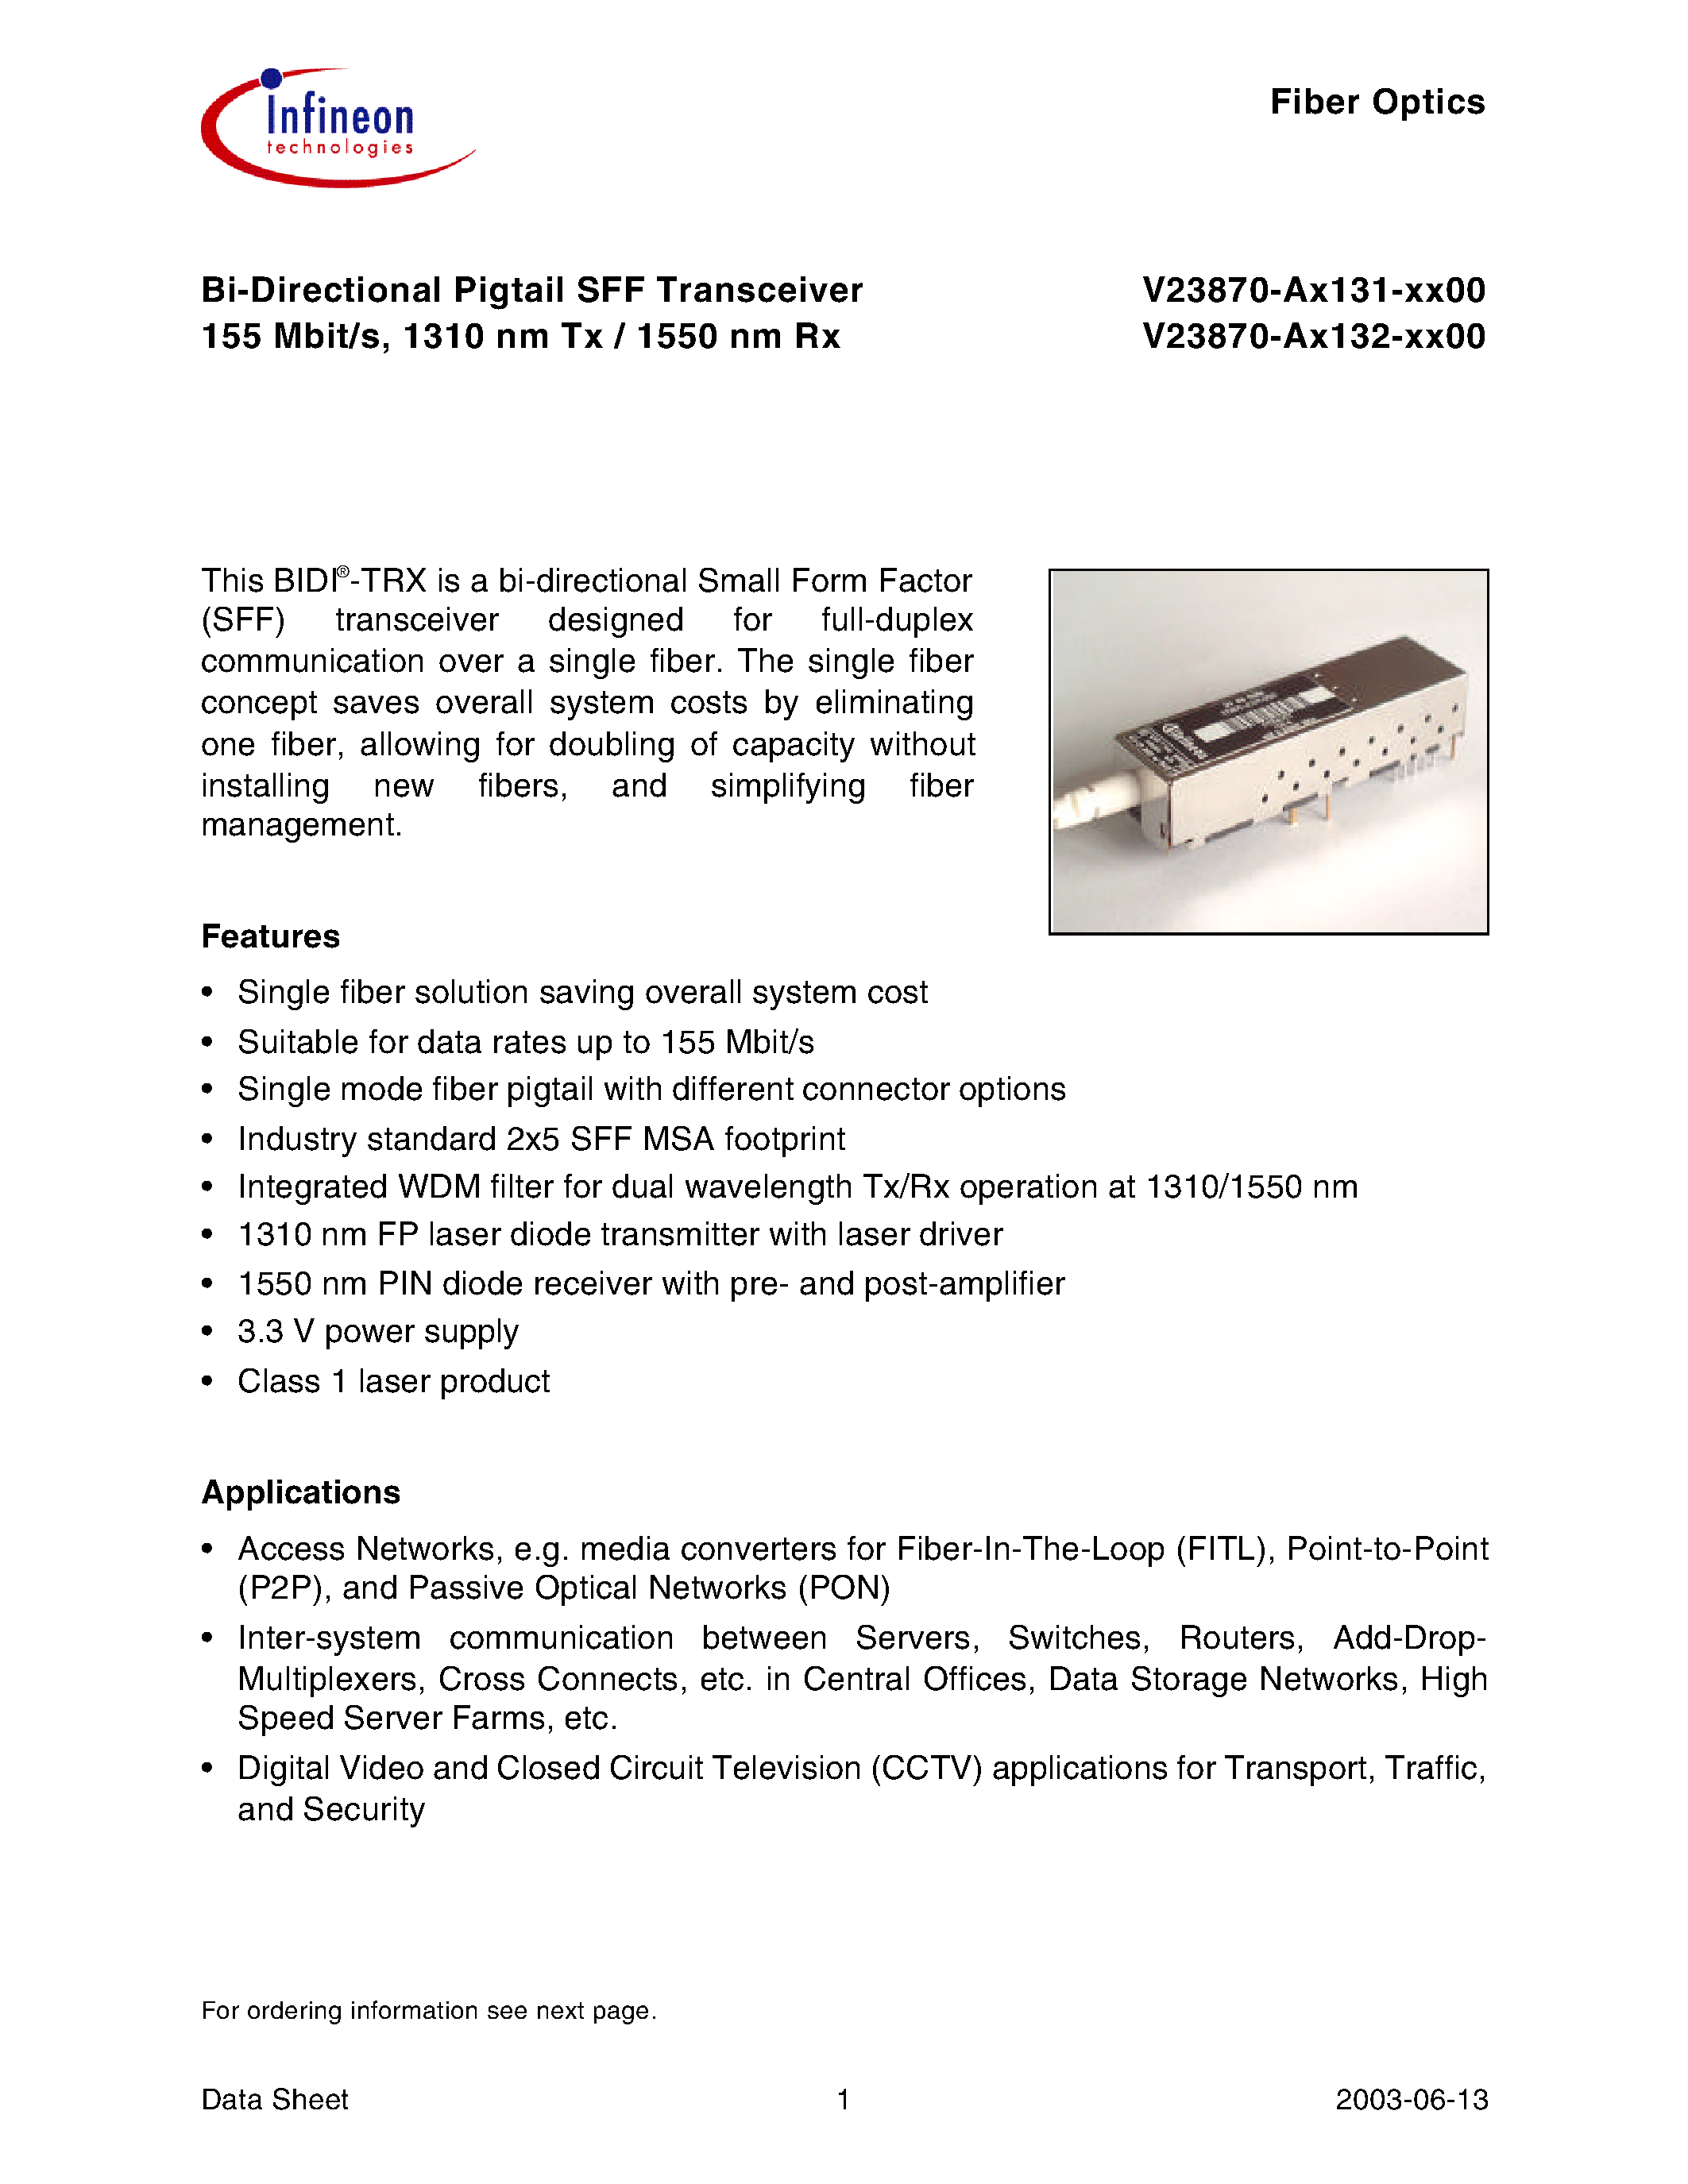 Даташит V23870-A3131-H200 - Bi-Directional Pigtail SFF Transceiver 155 Mbit/s/ 1310 nm Tx / 1550 nm Rx страница 1